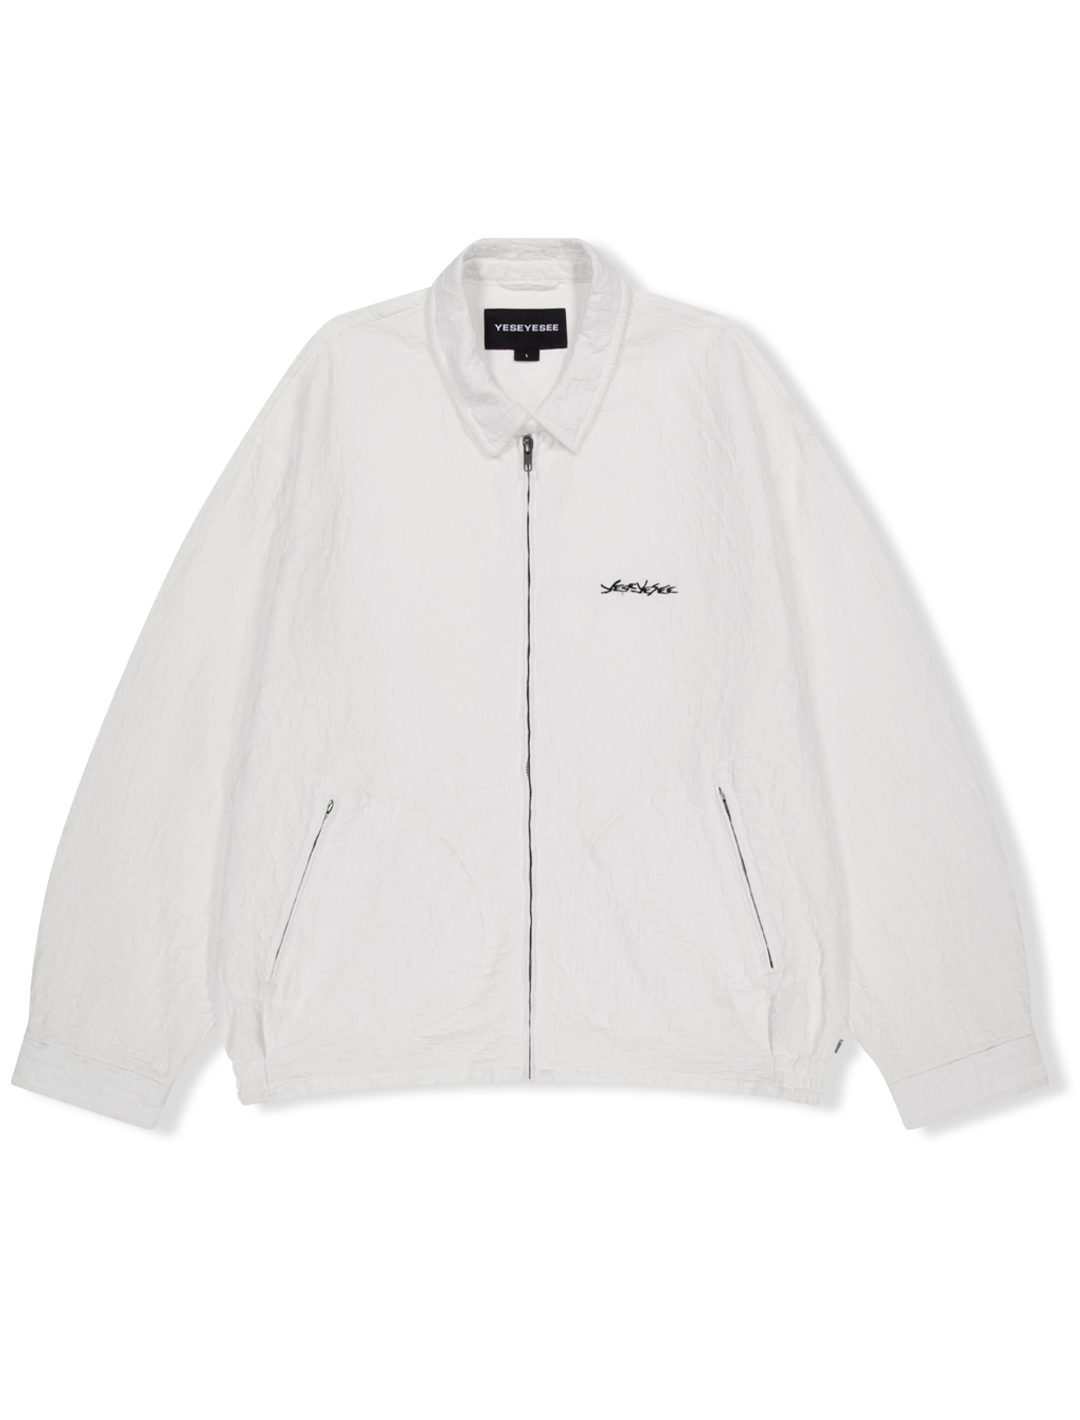 Abstract Jacquard Zip Jacket White